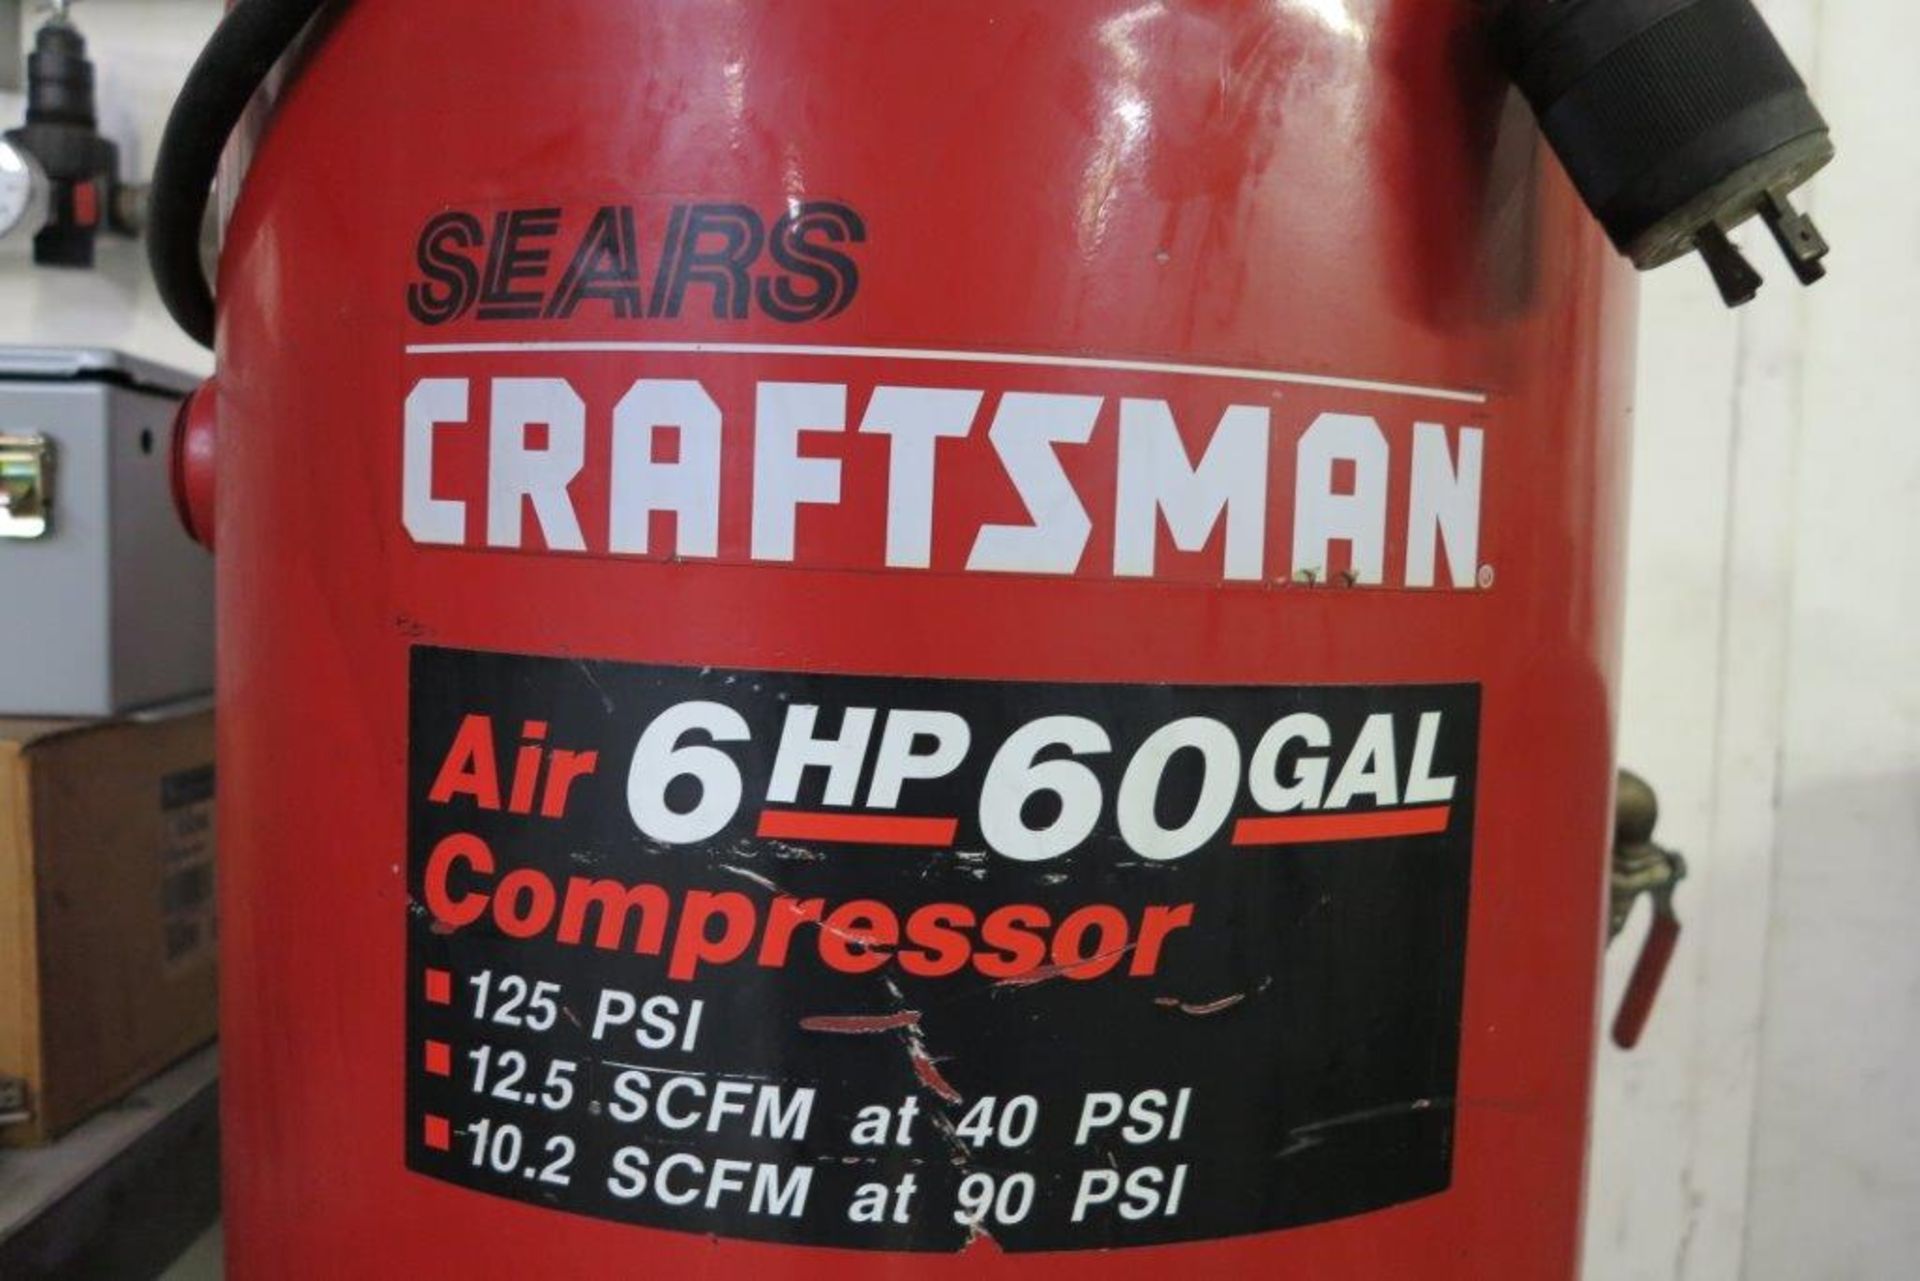 CRAFTSMAN 6HP, 60 GAL. AIR COMPRESSOR. - Image 2 of 2